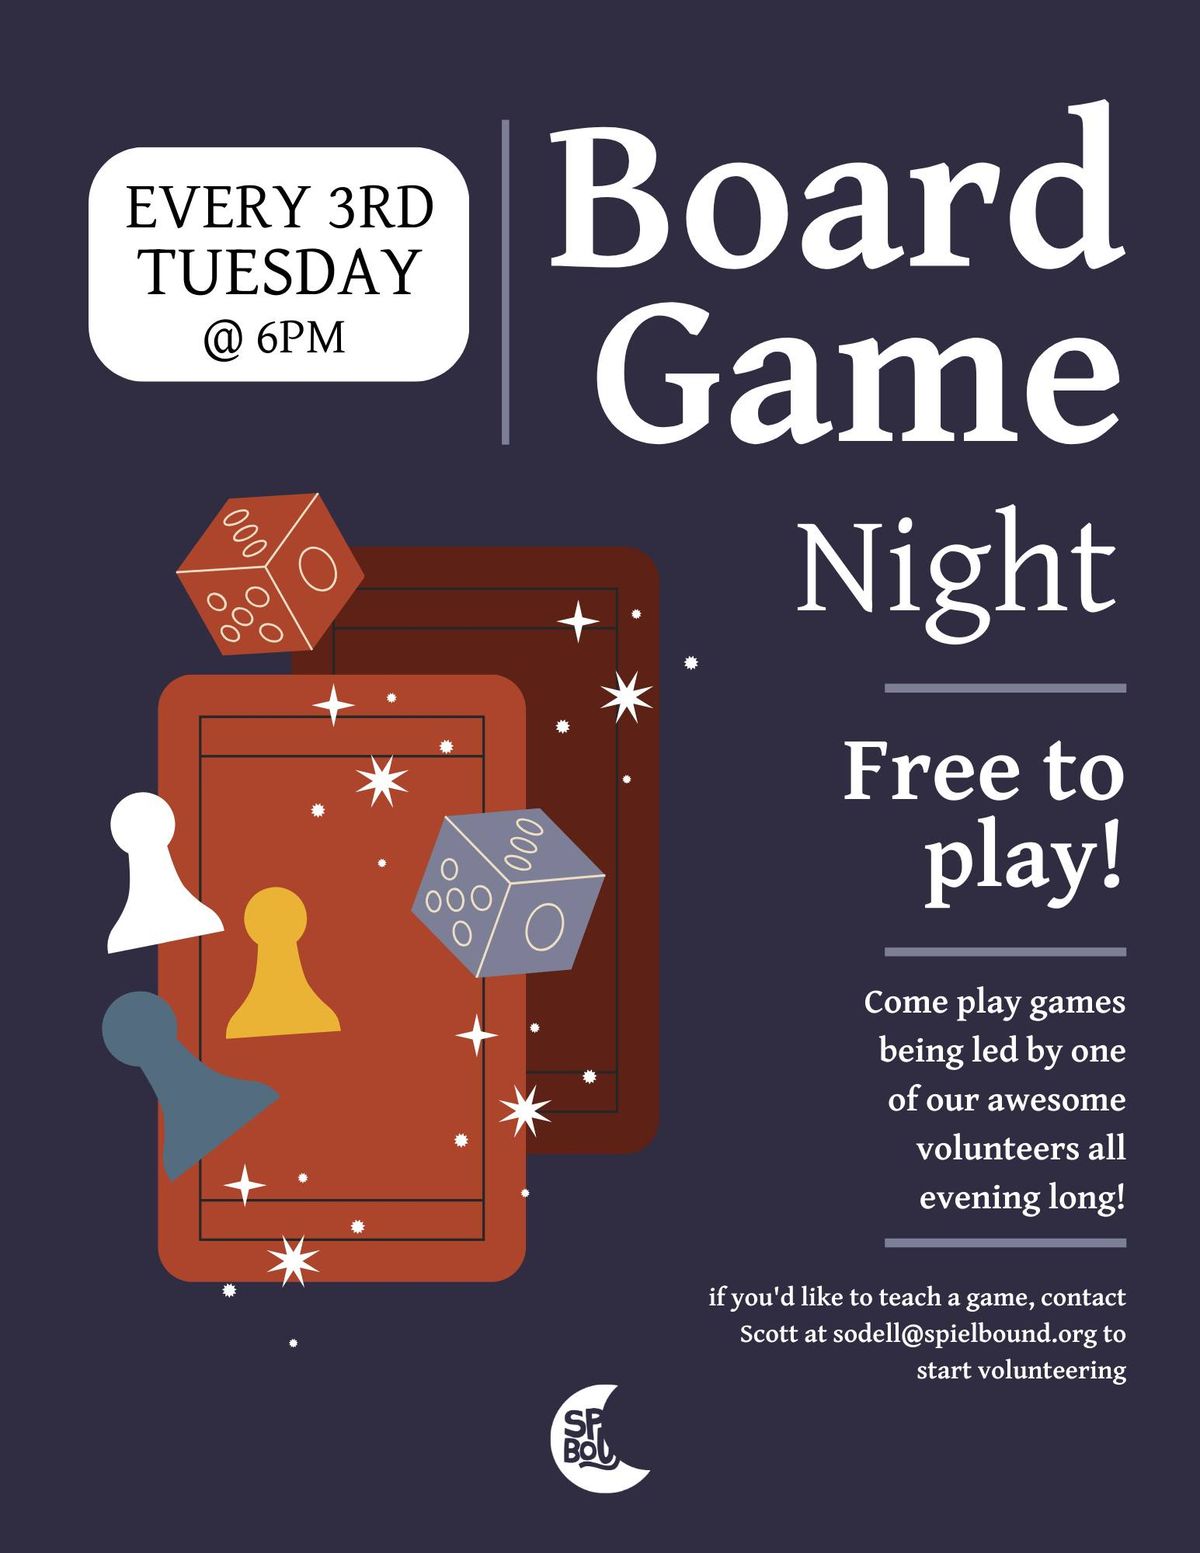  Game Night - Free to play!